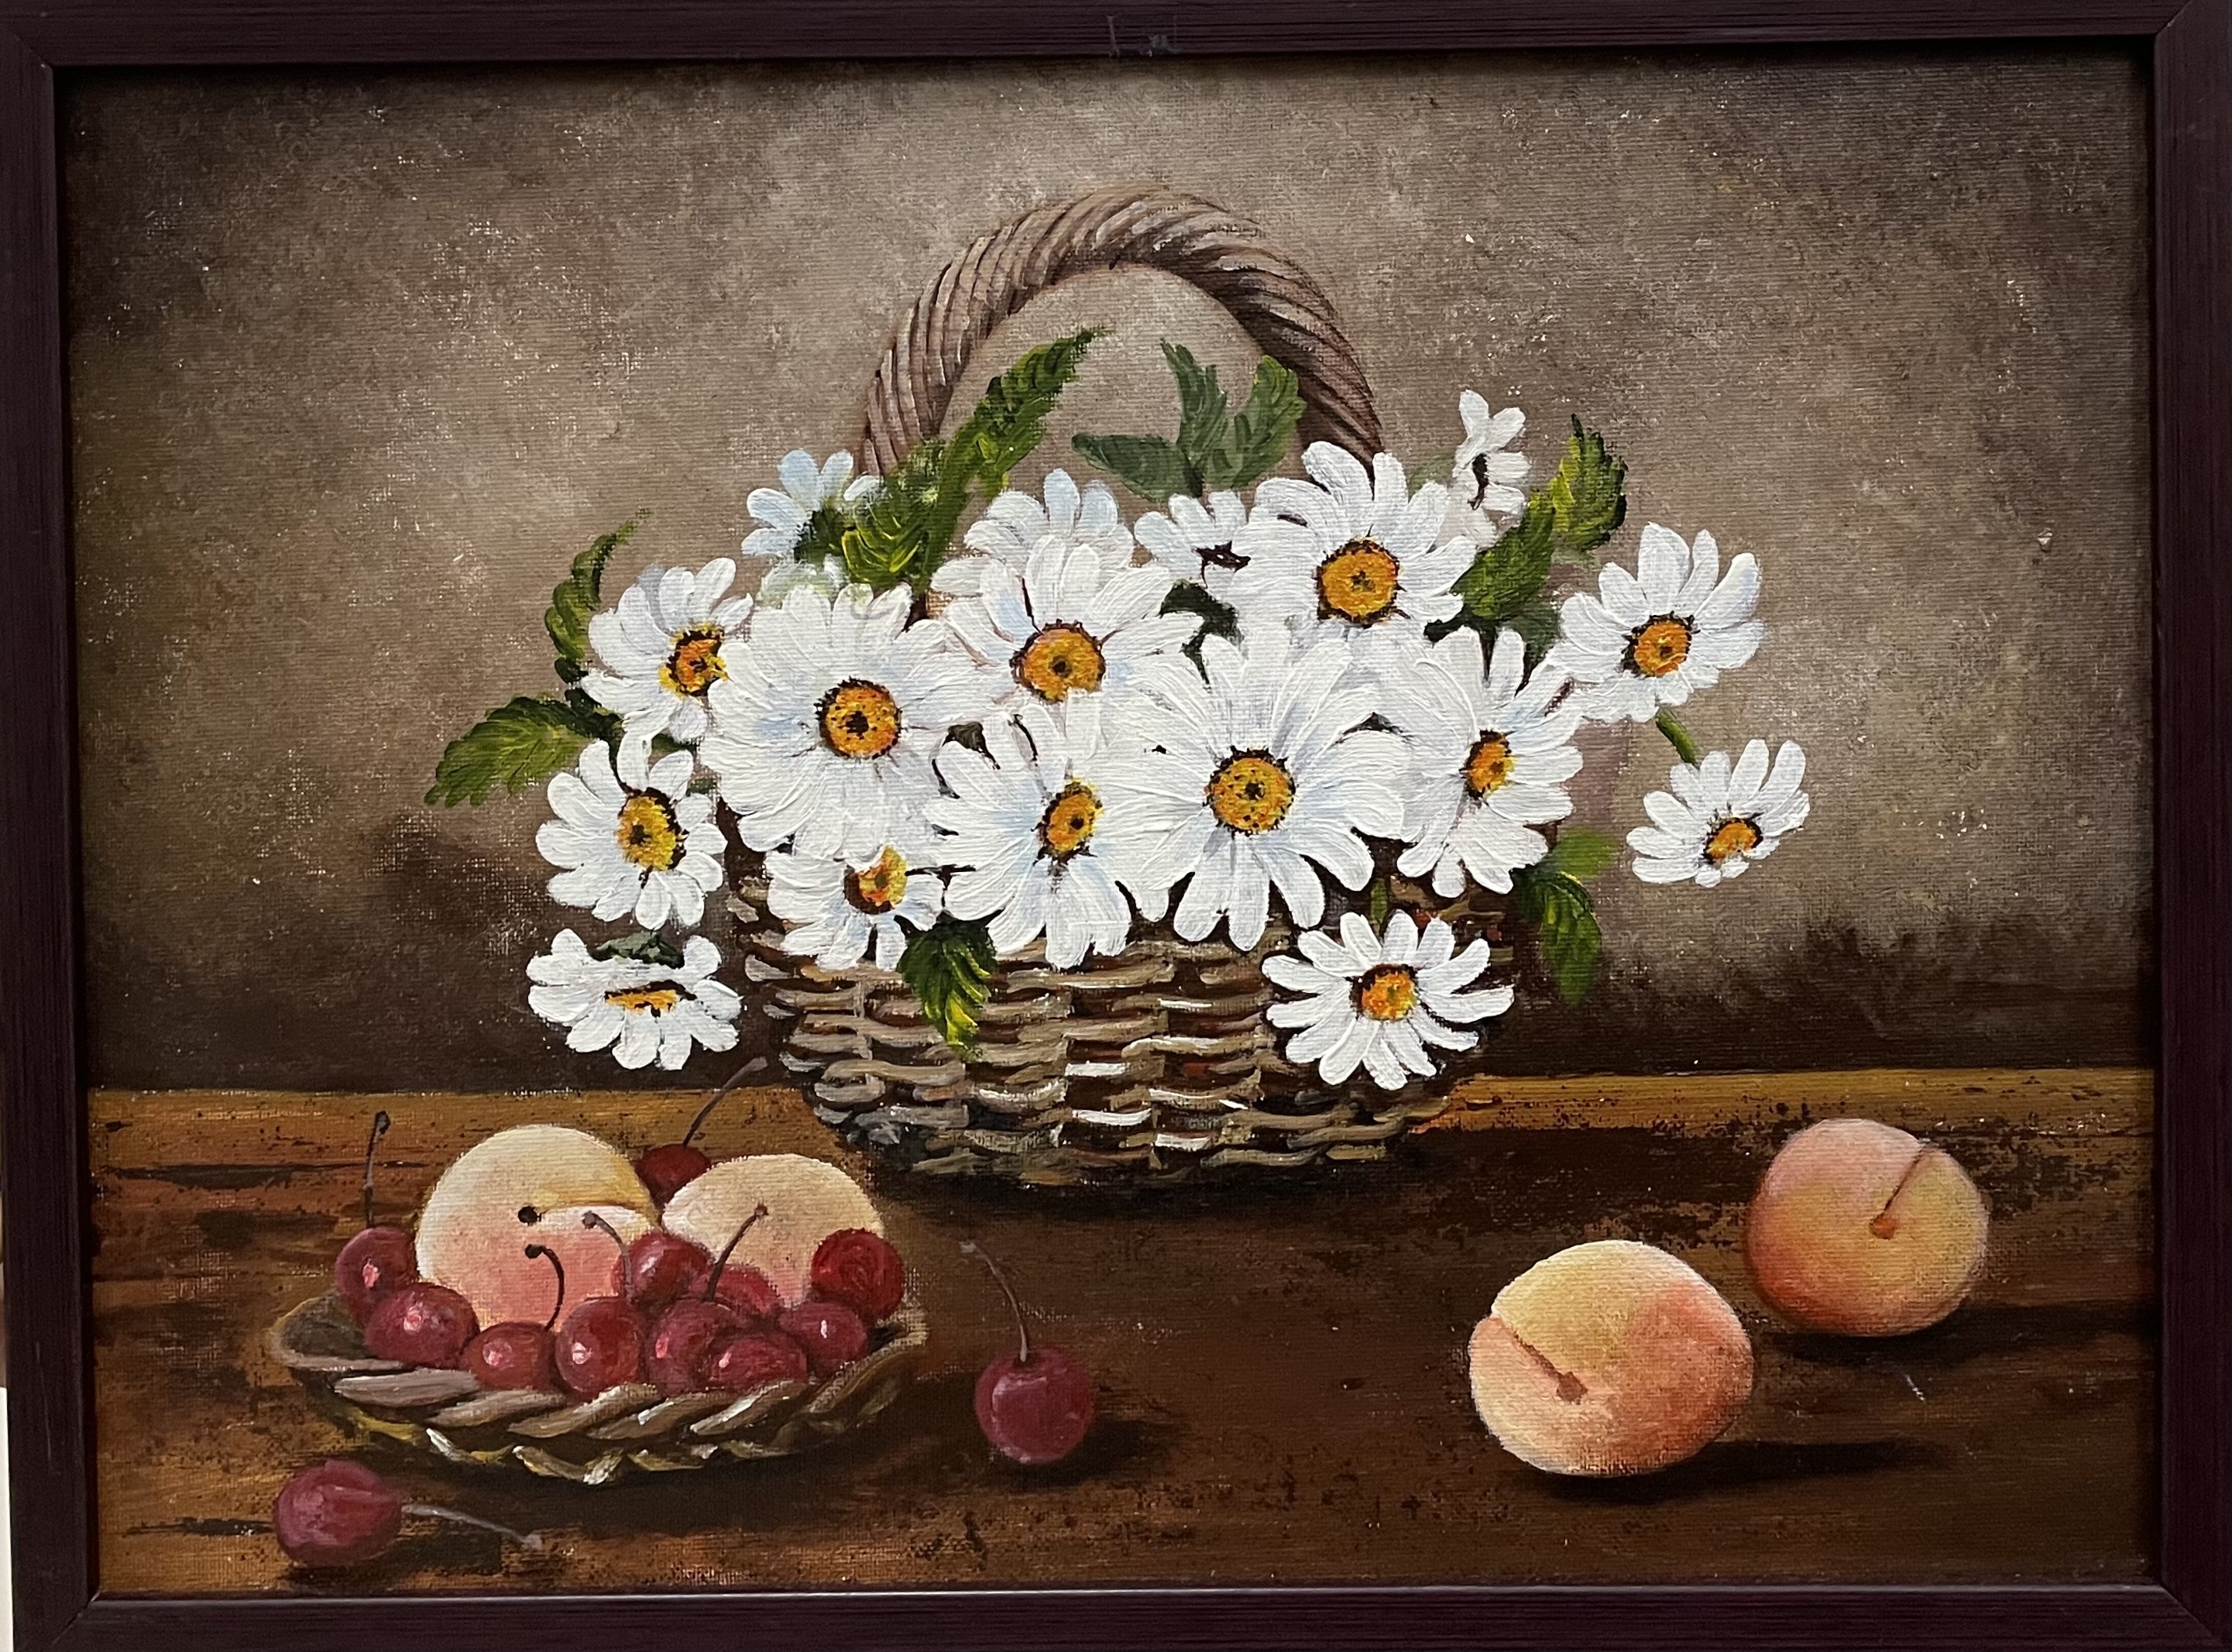 Flower basket by Samantha Wijesinghe